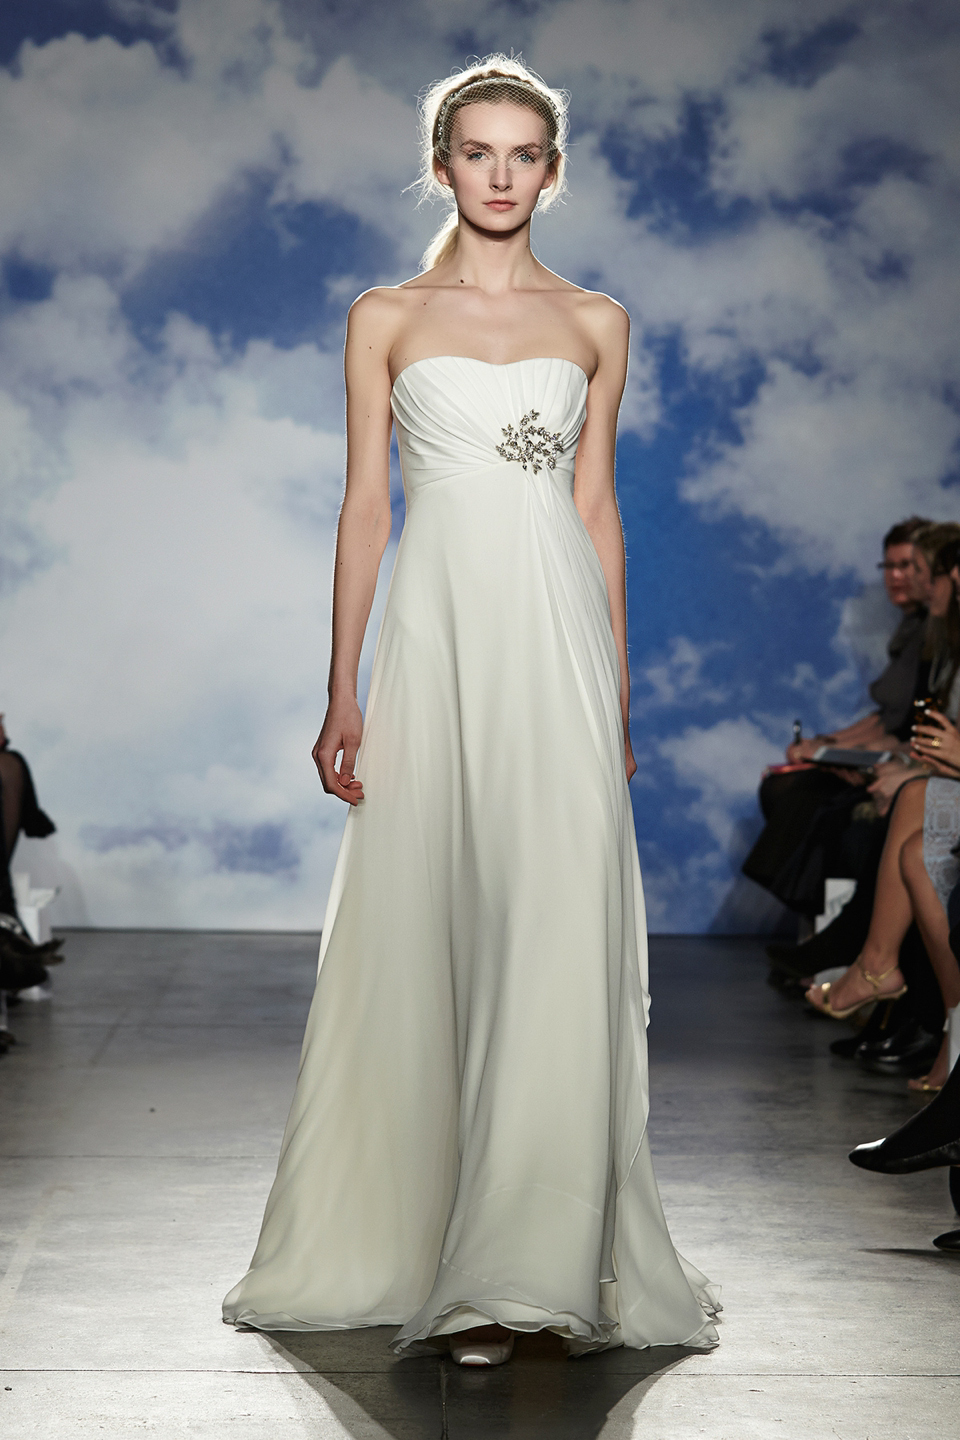 Antecedent Framework Tranquility Jenny Packham 2015 Bridal Collection - New York Bridal Fashion Week Catwalk  Images - Love My Dress® - Wedding Inspiration Daily